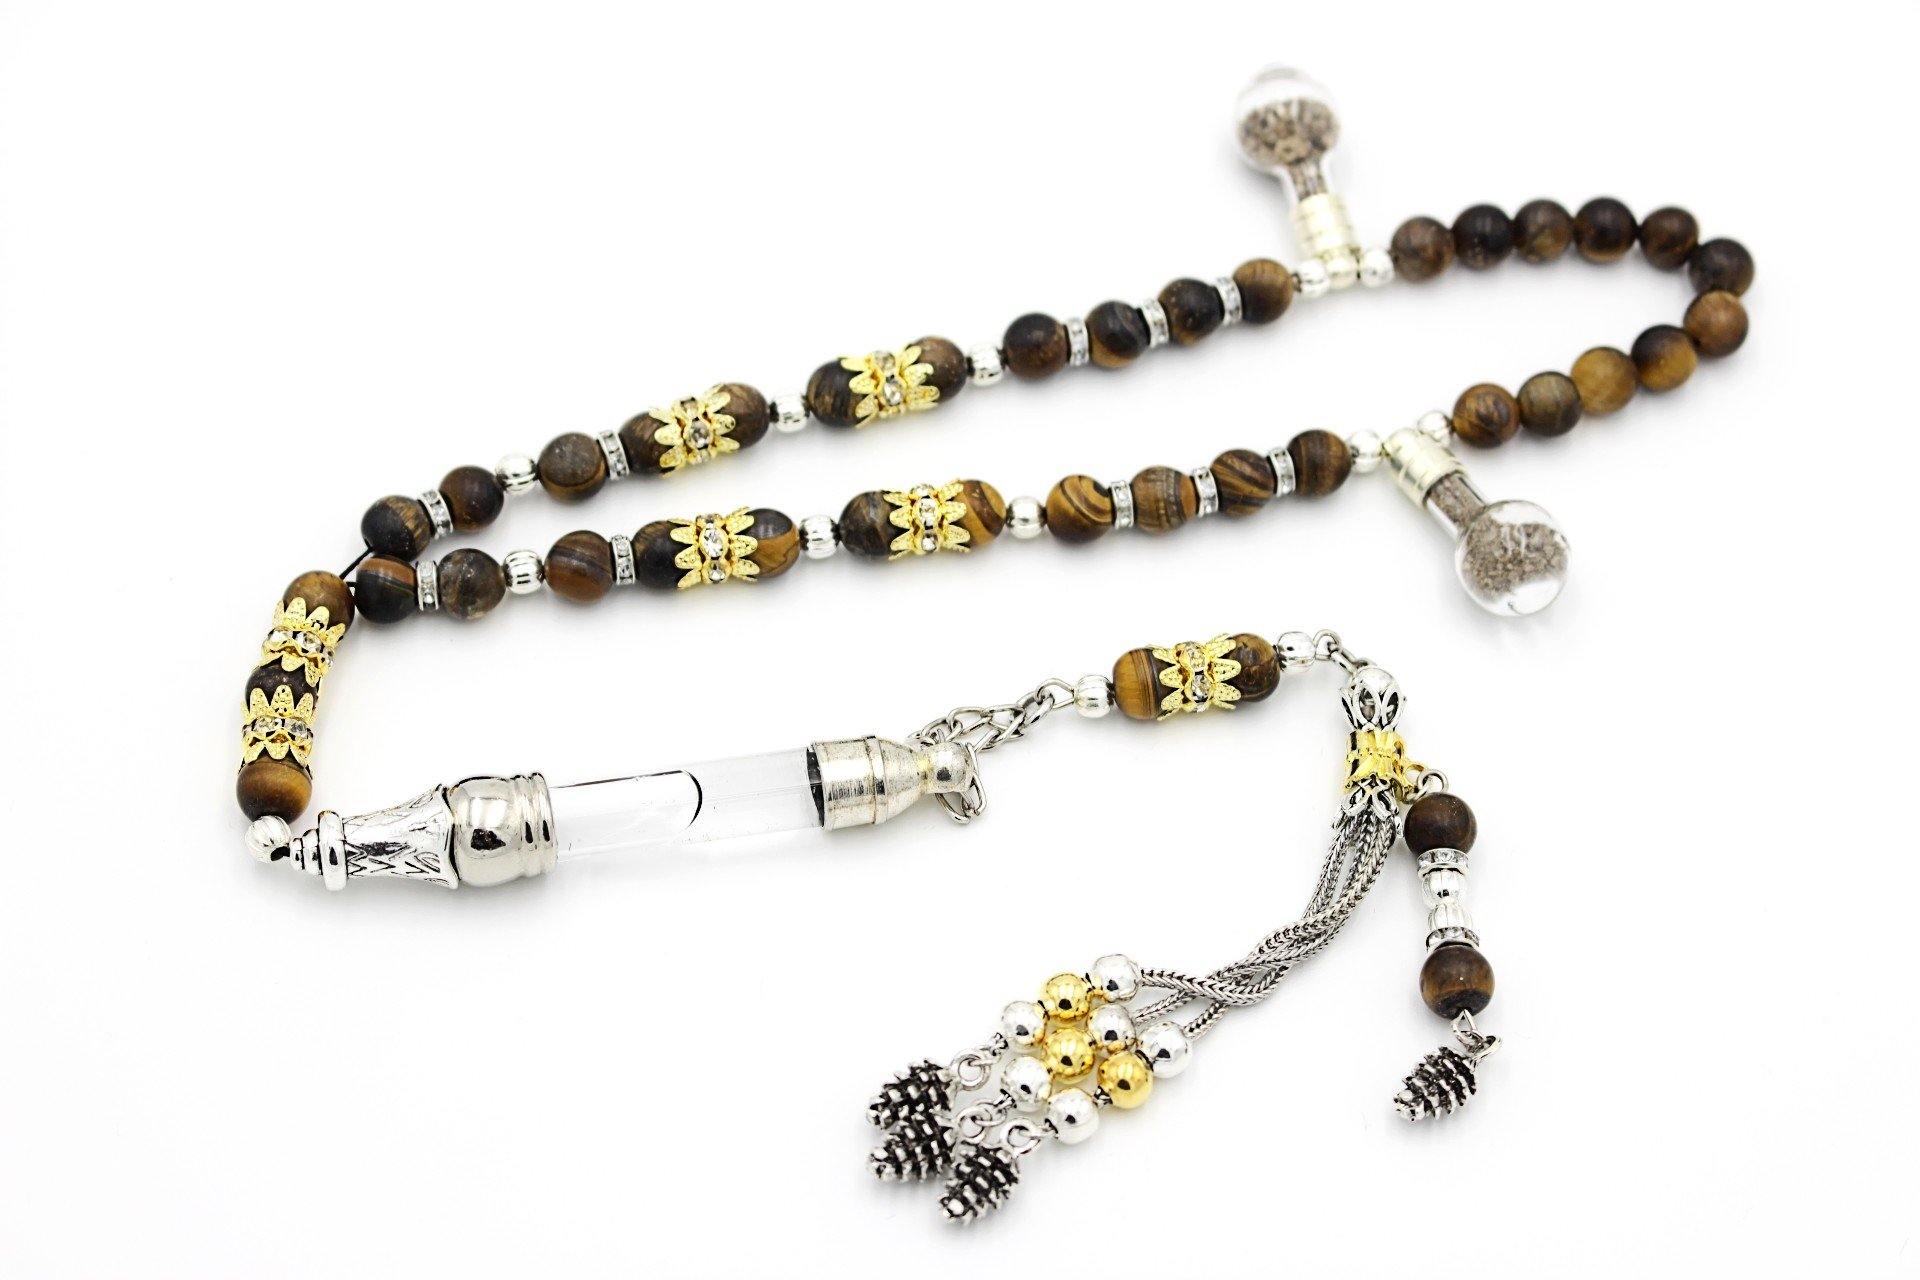 Bronzite prayer beads gemstones silver jewellery luxury tesbih